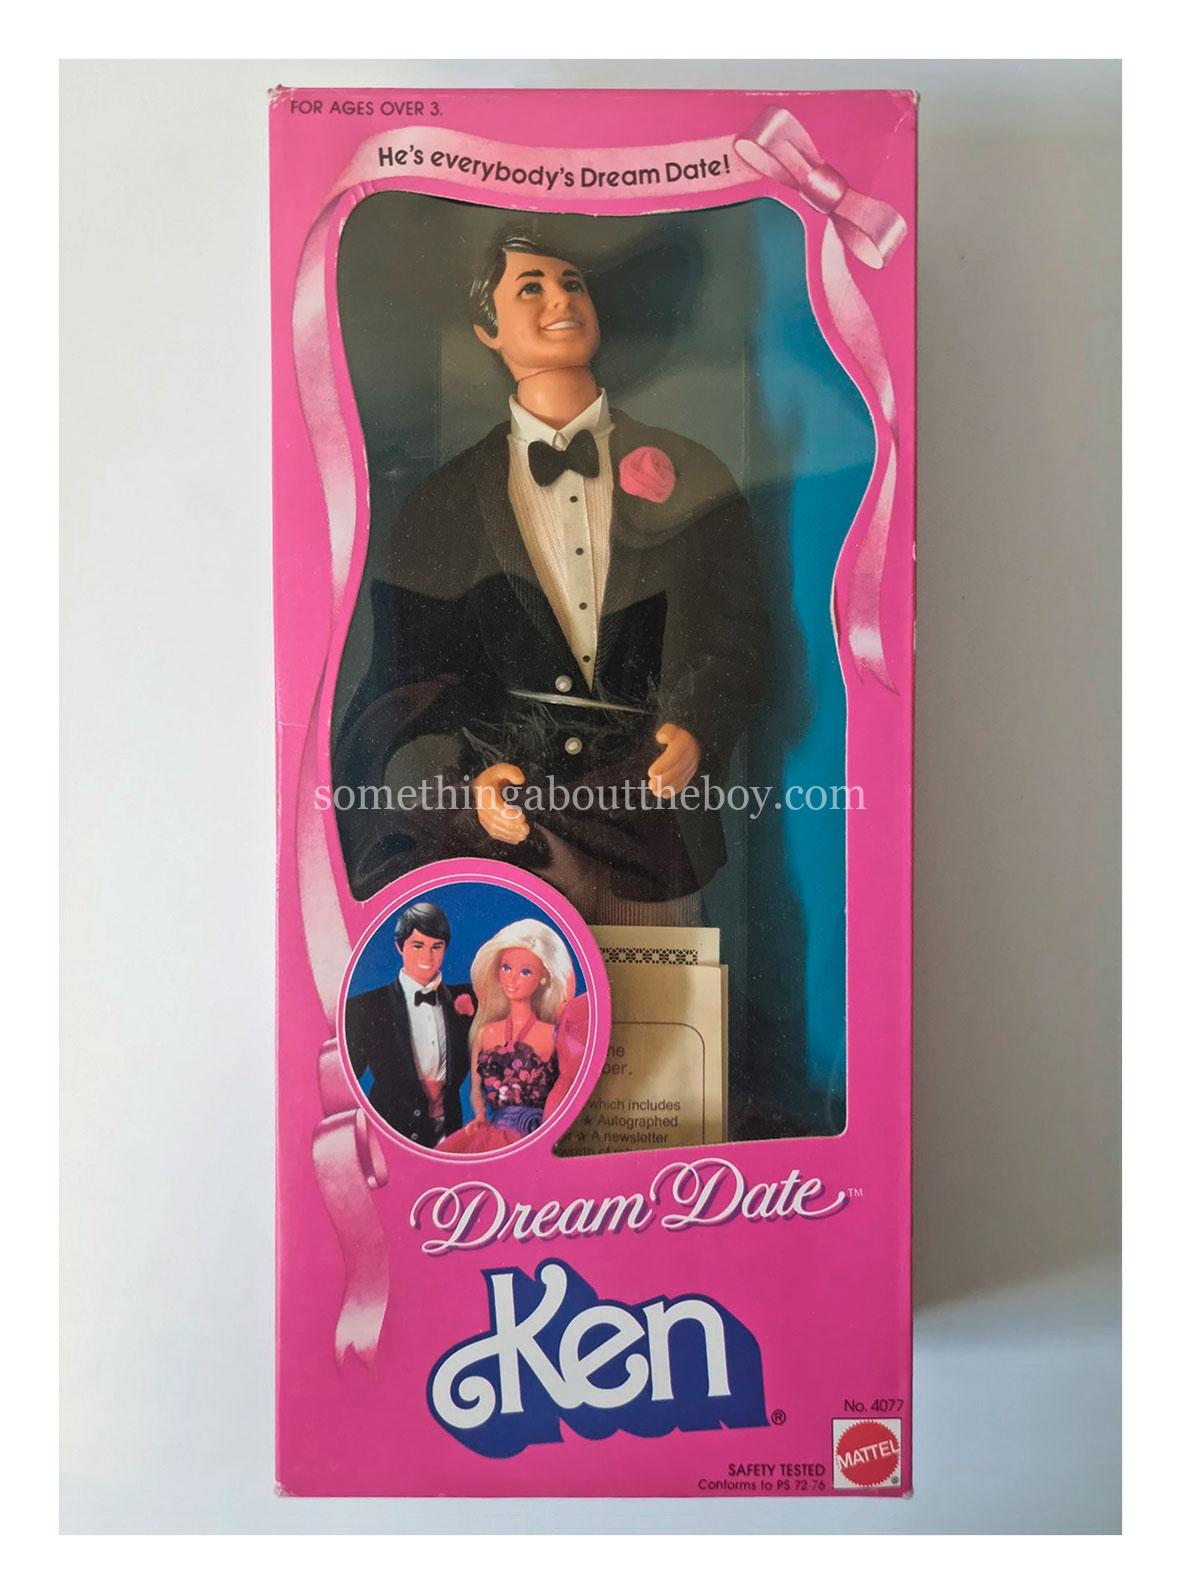 1983 #4077 Dream Date Ken in original packaging